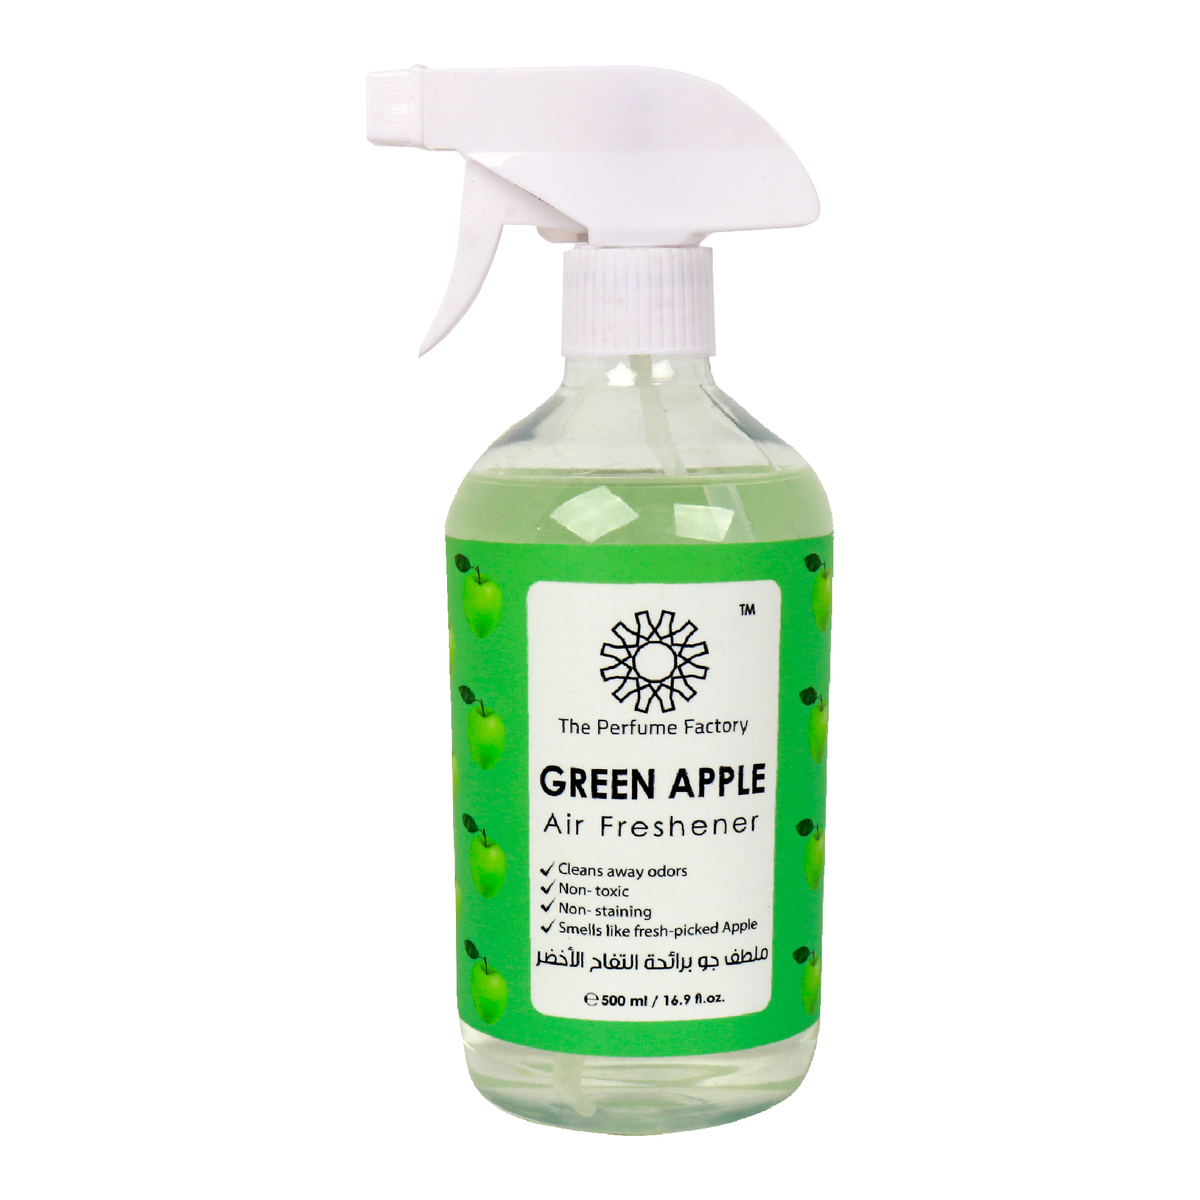 The Perfume Factory Air Freshener Green Apple 500ml